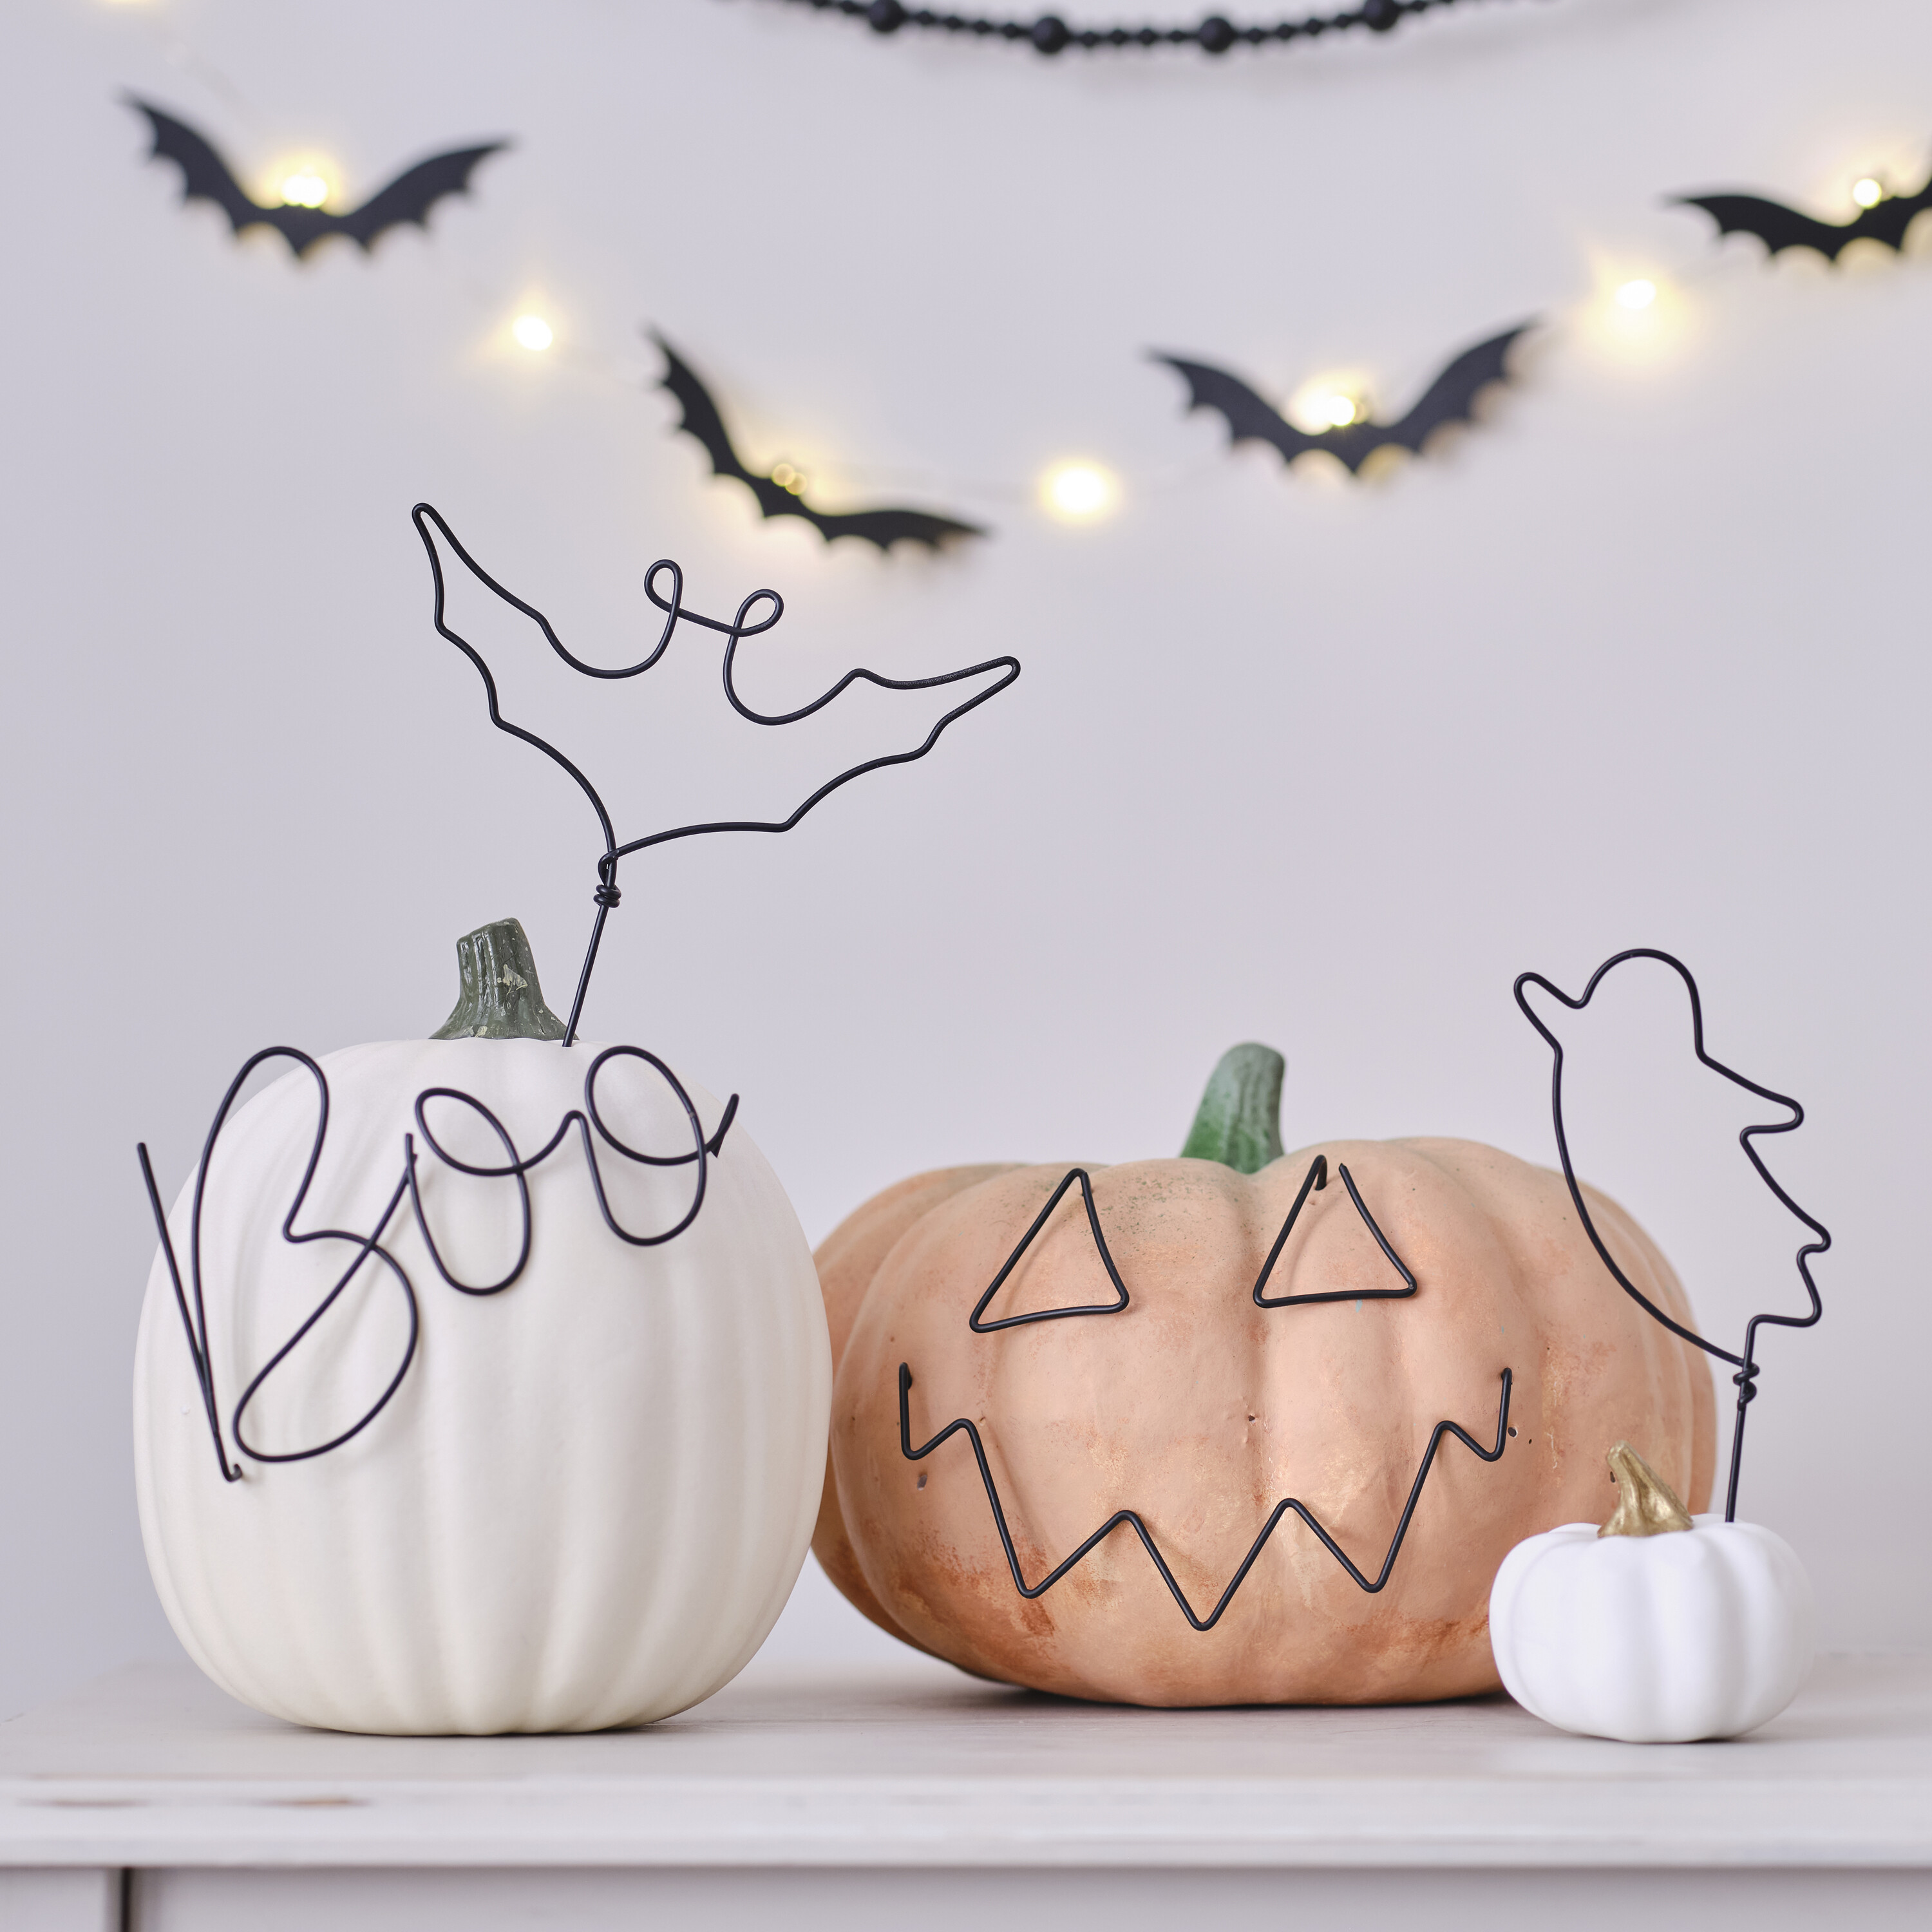 10+ Creative Pumpkin Decorating Ideas - Best Way to Decorate Pumpkins